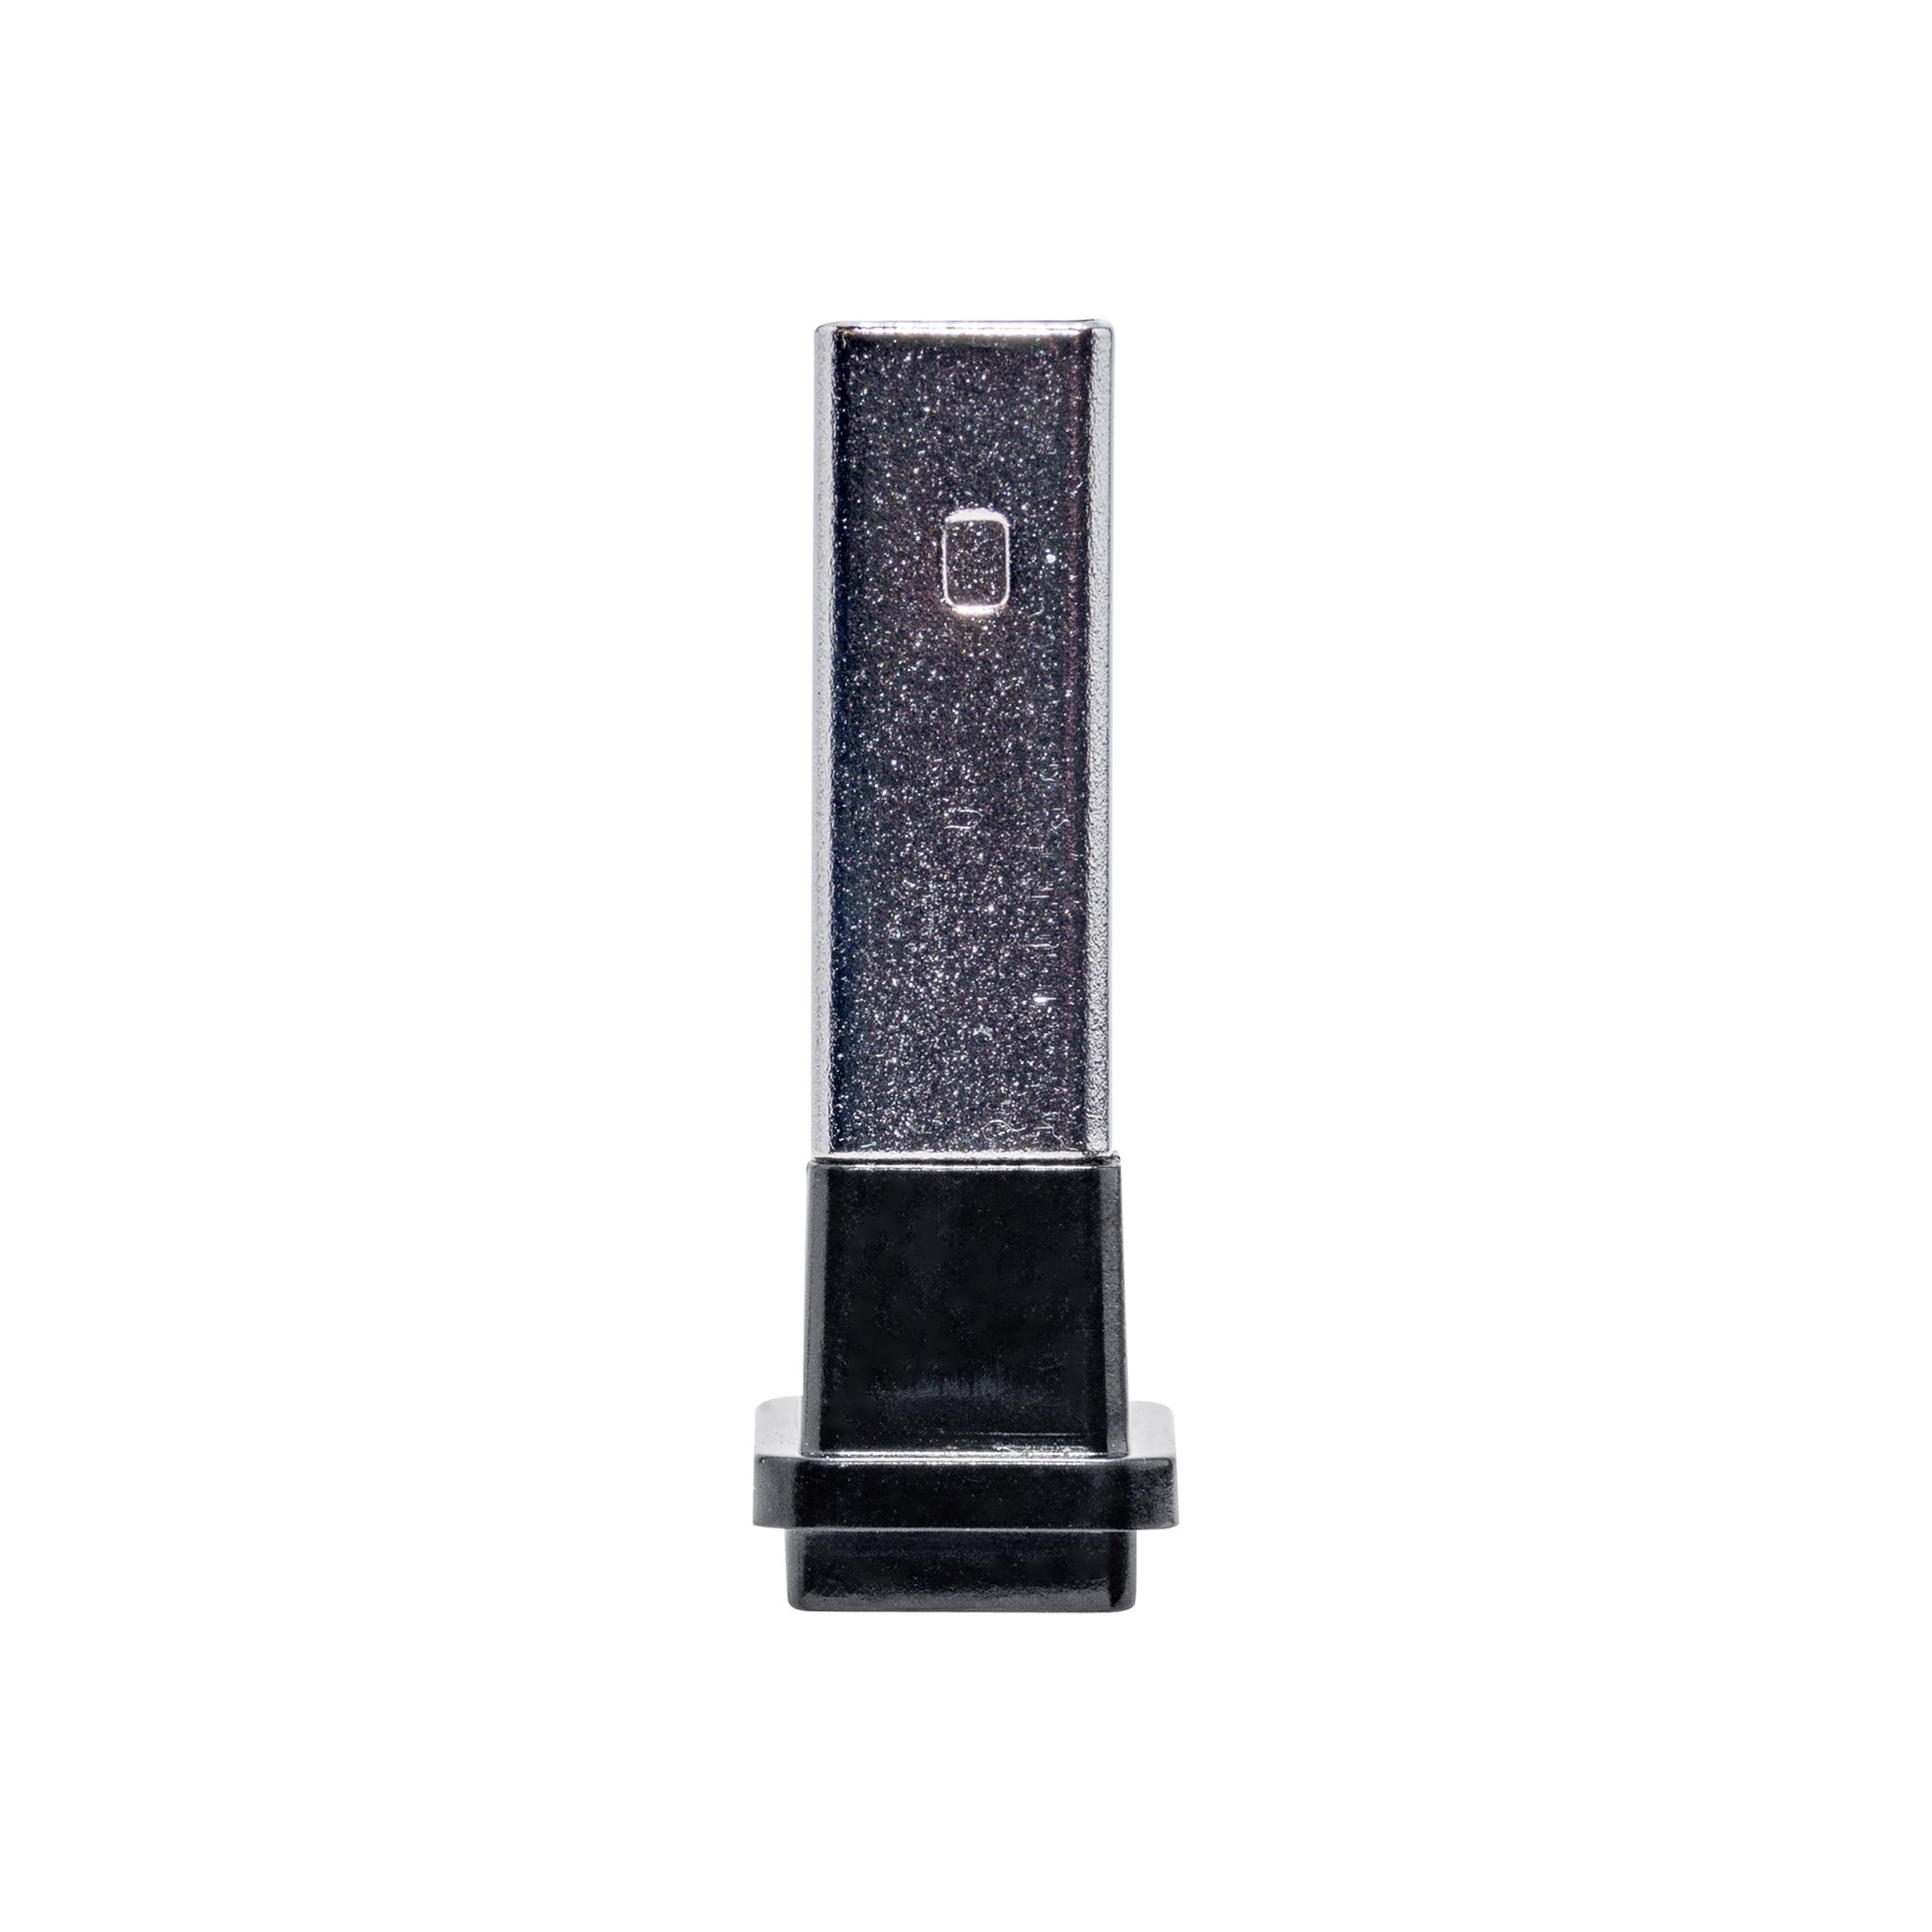 USB Bluetooth 5.0 Adapter/Dongle for PC - Bluetooth & Telecom